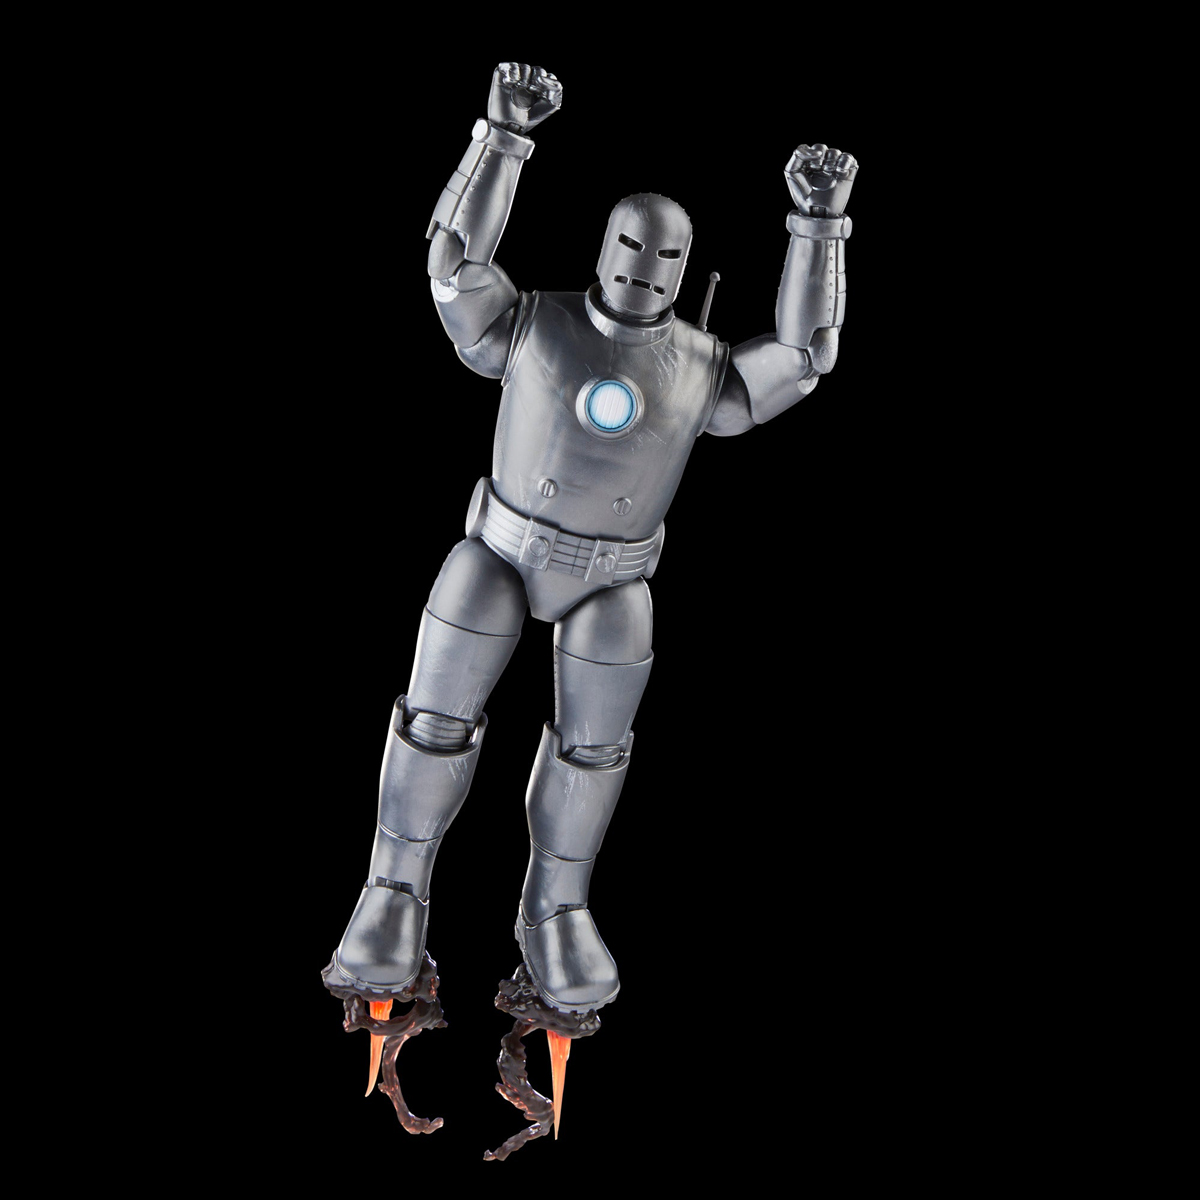 Marvel-Legends-Iron-Man-Model-1-Avengers-60th-Anniversary-Action-Figure-1